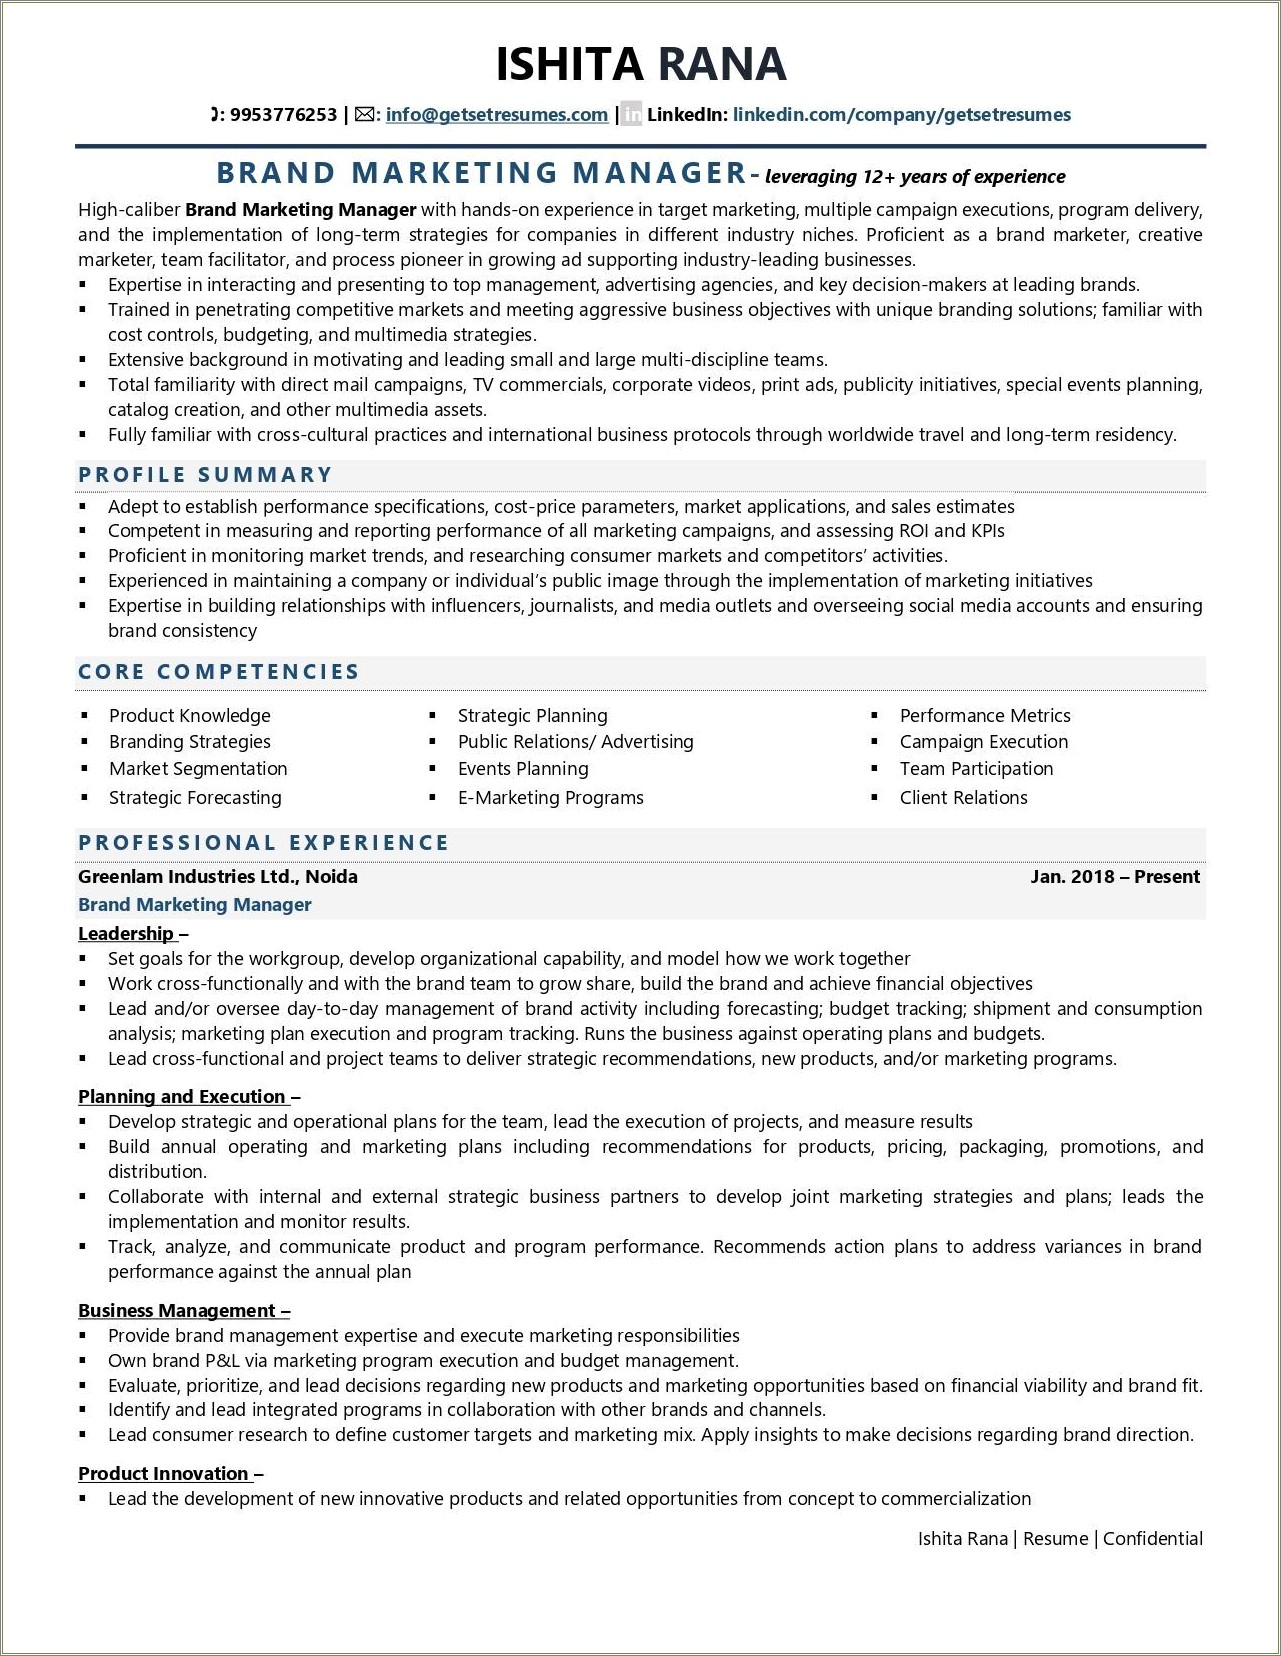 Sample Resume For Brand Marketing Manager